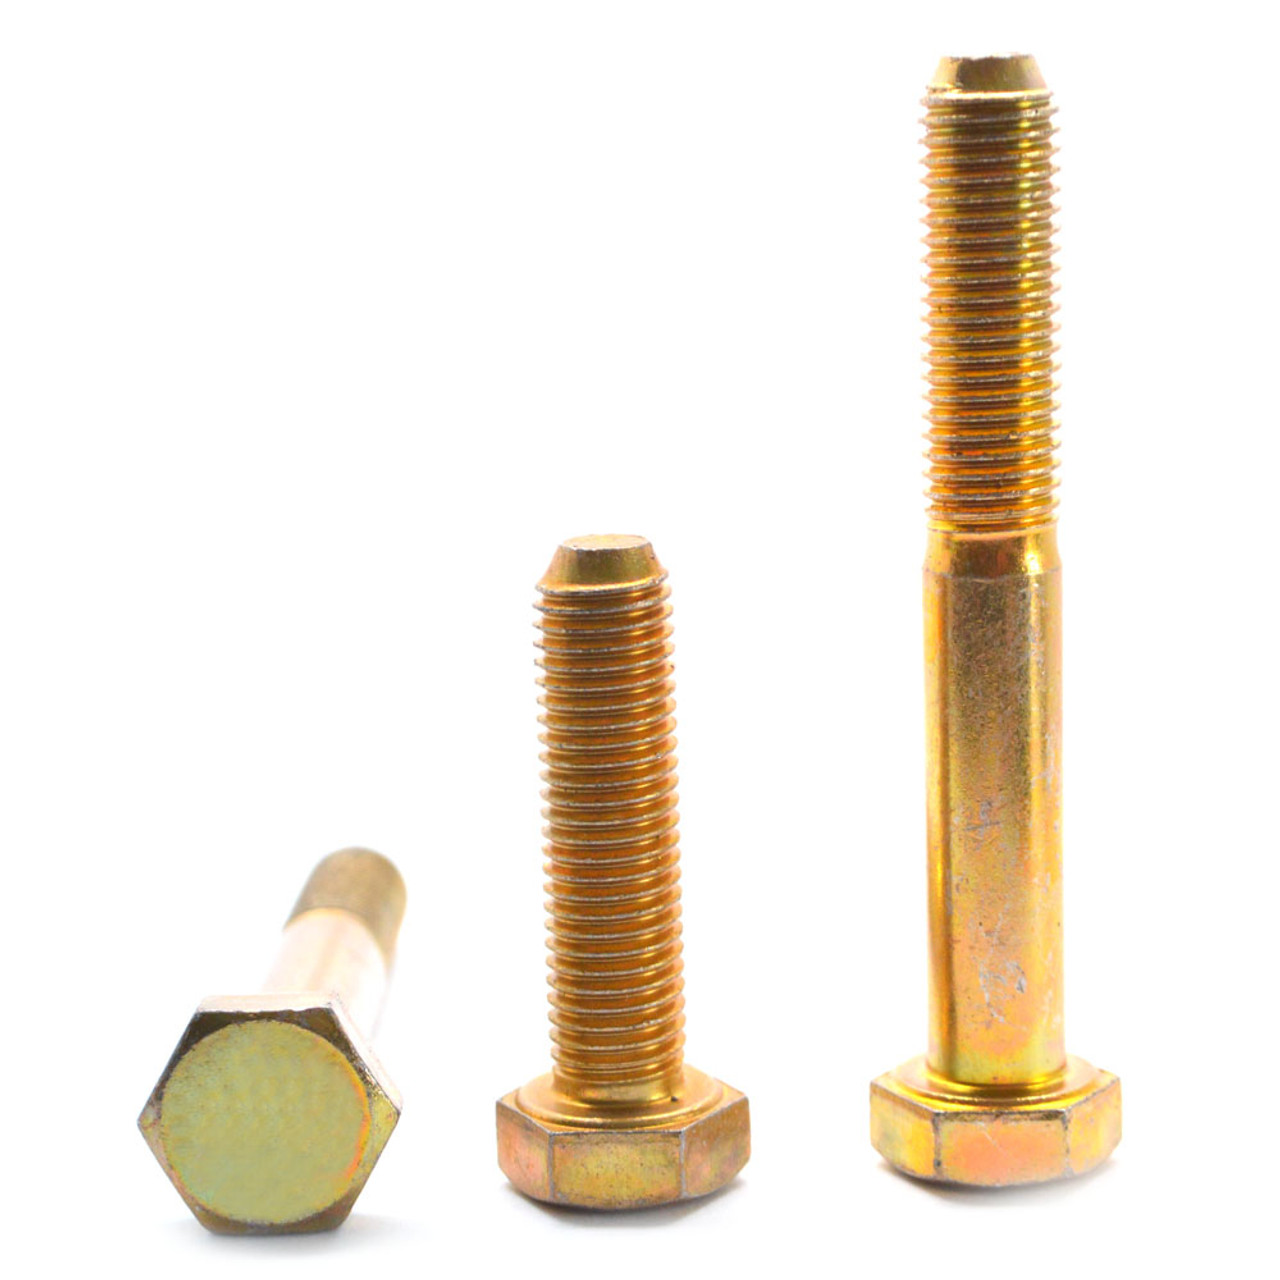 M12 x 1.75 x 80 MM (PT) Coarse Thread DIN 931 Class 10.9 Hex Cap Screw (Bolt) Alloy Steel Yellow Zinc Plated